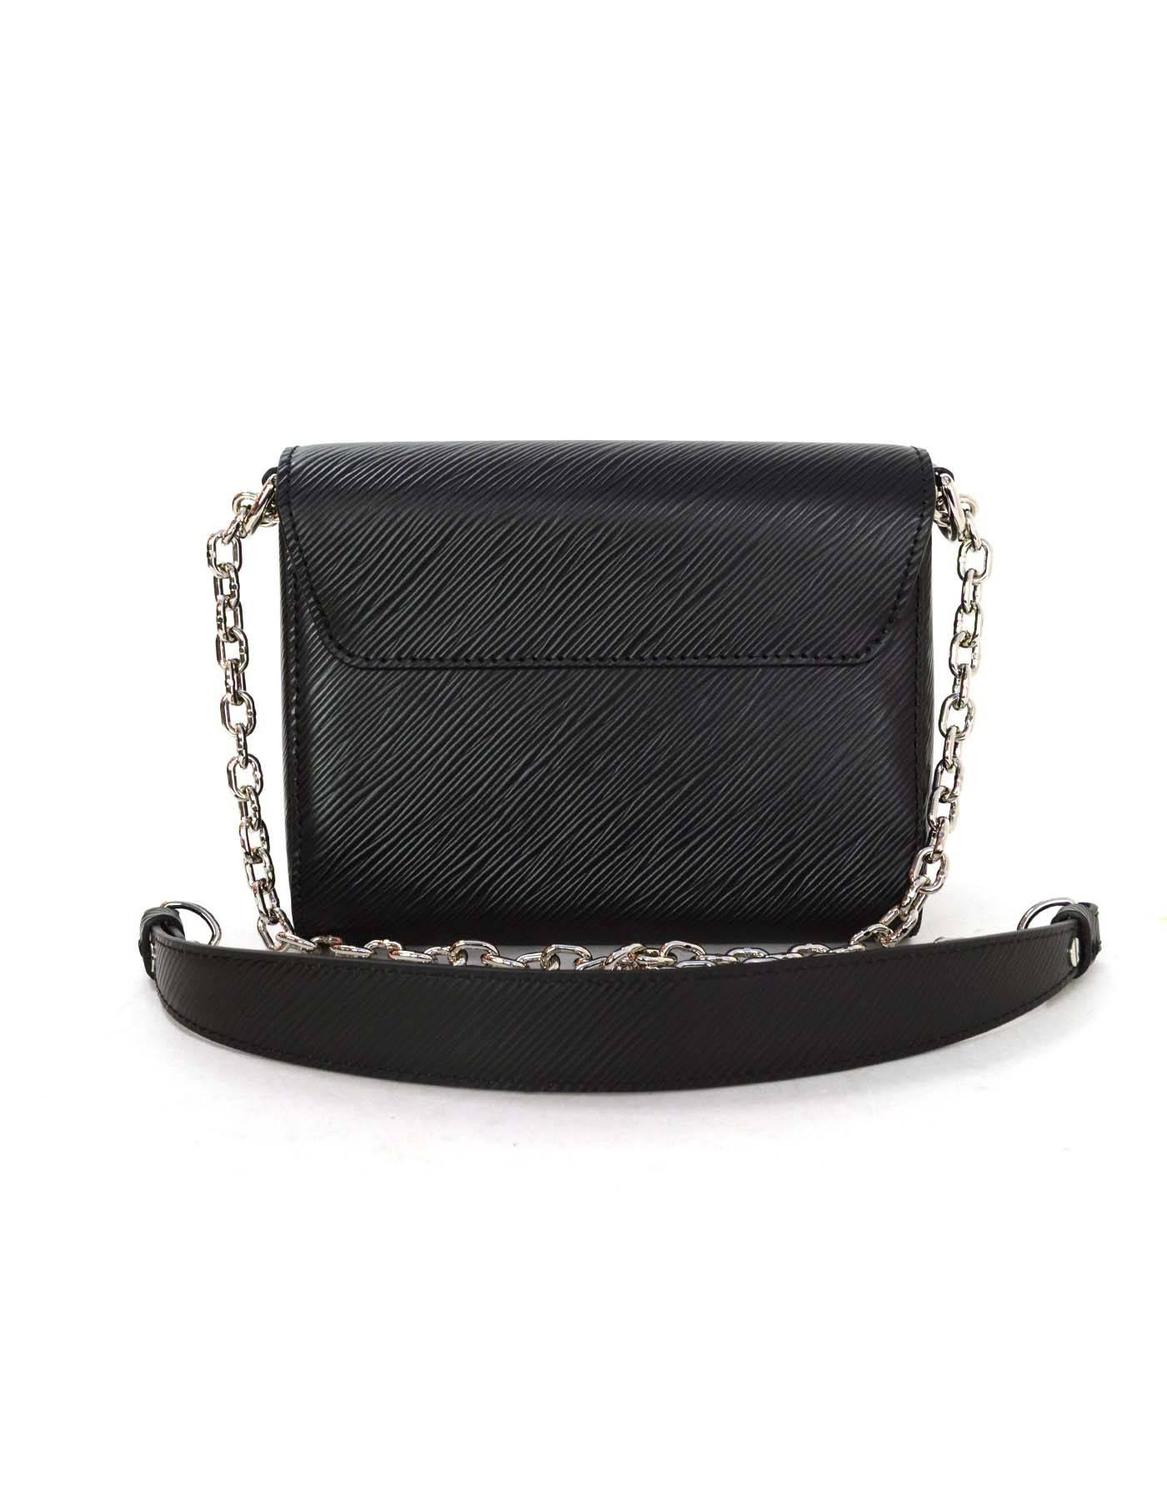 Louis Vuitton NEW Black Epi Twist PM Bag SHW rt. $3,250 For Sale at 1stdibs